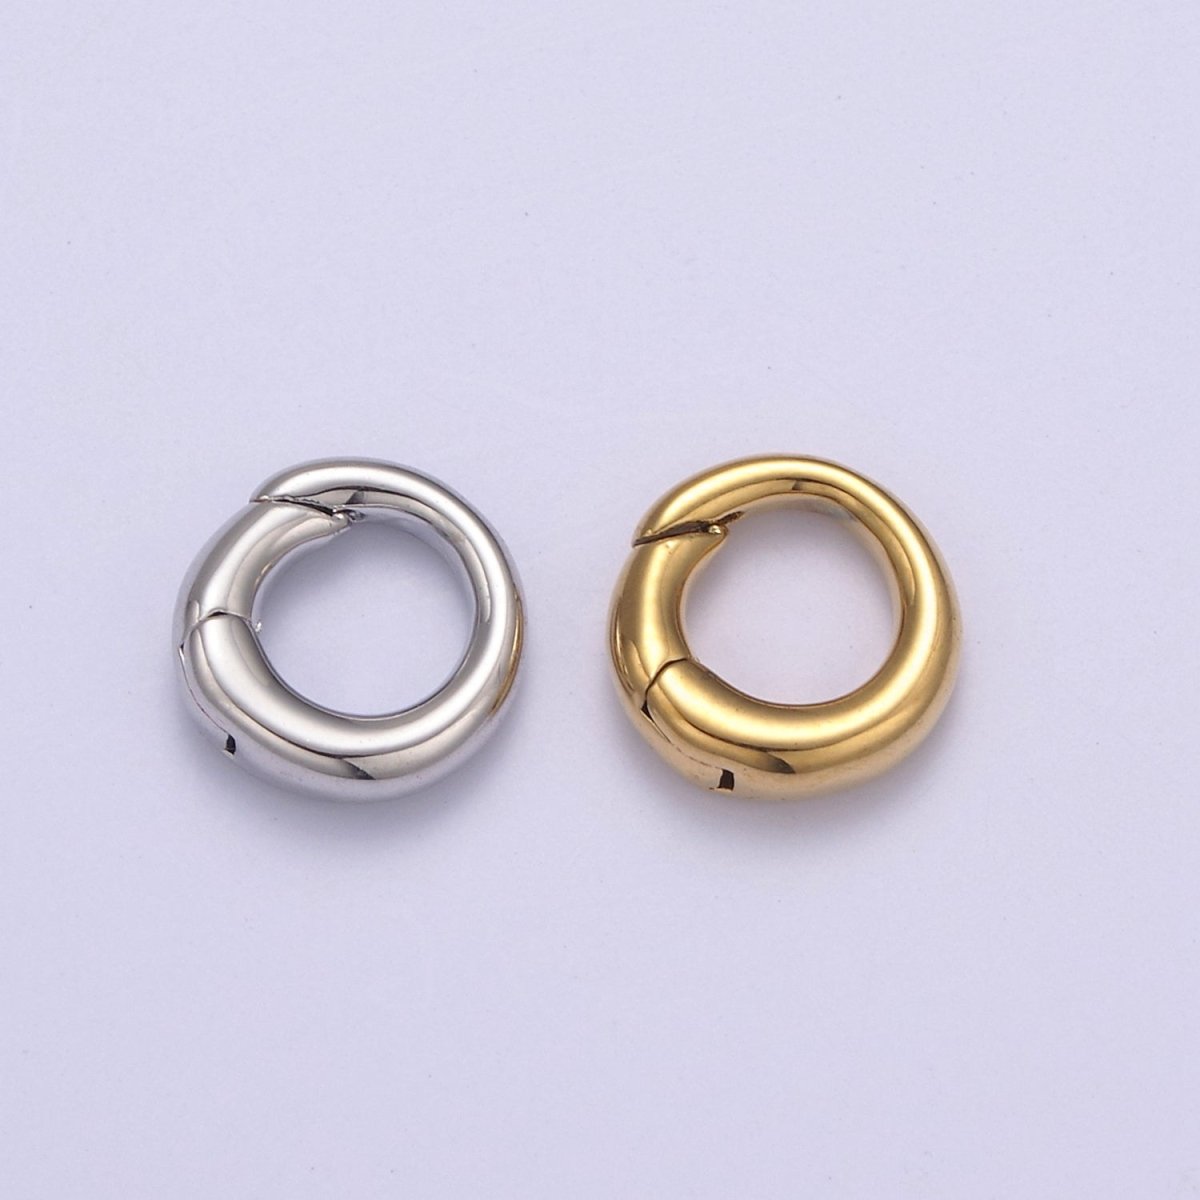 Mini Gold Silver Spring Gate Ring 10mm Round Circle Ring, Round Clasp, Push Clip Clasp, Spring Gate for Jewelry Making L-656 L-657 - DLUXCA